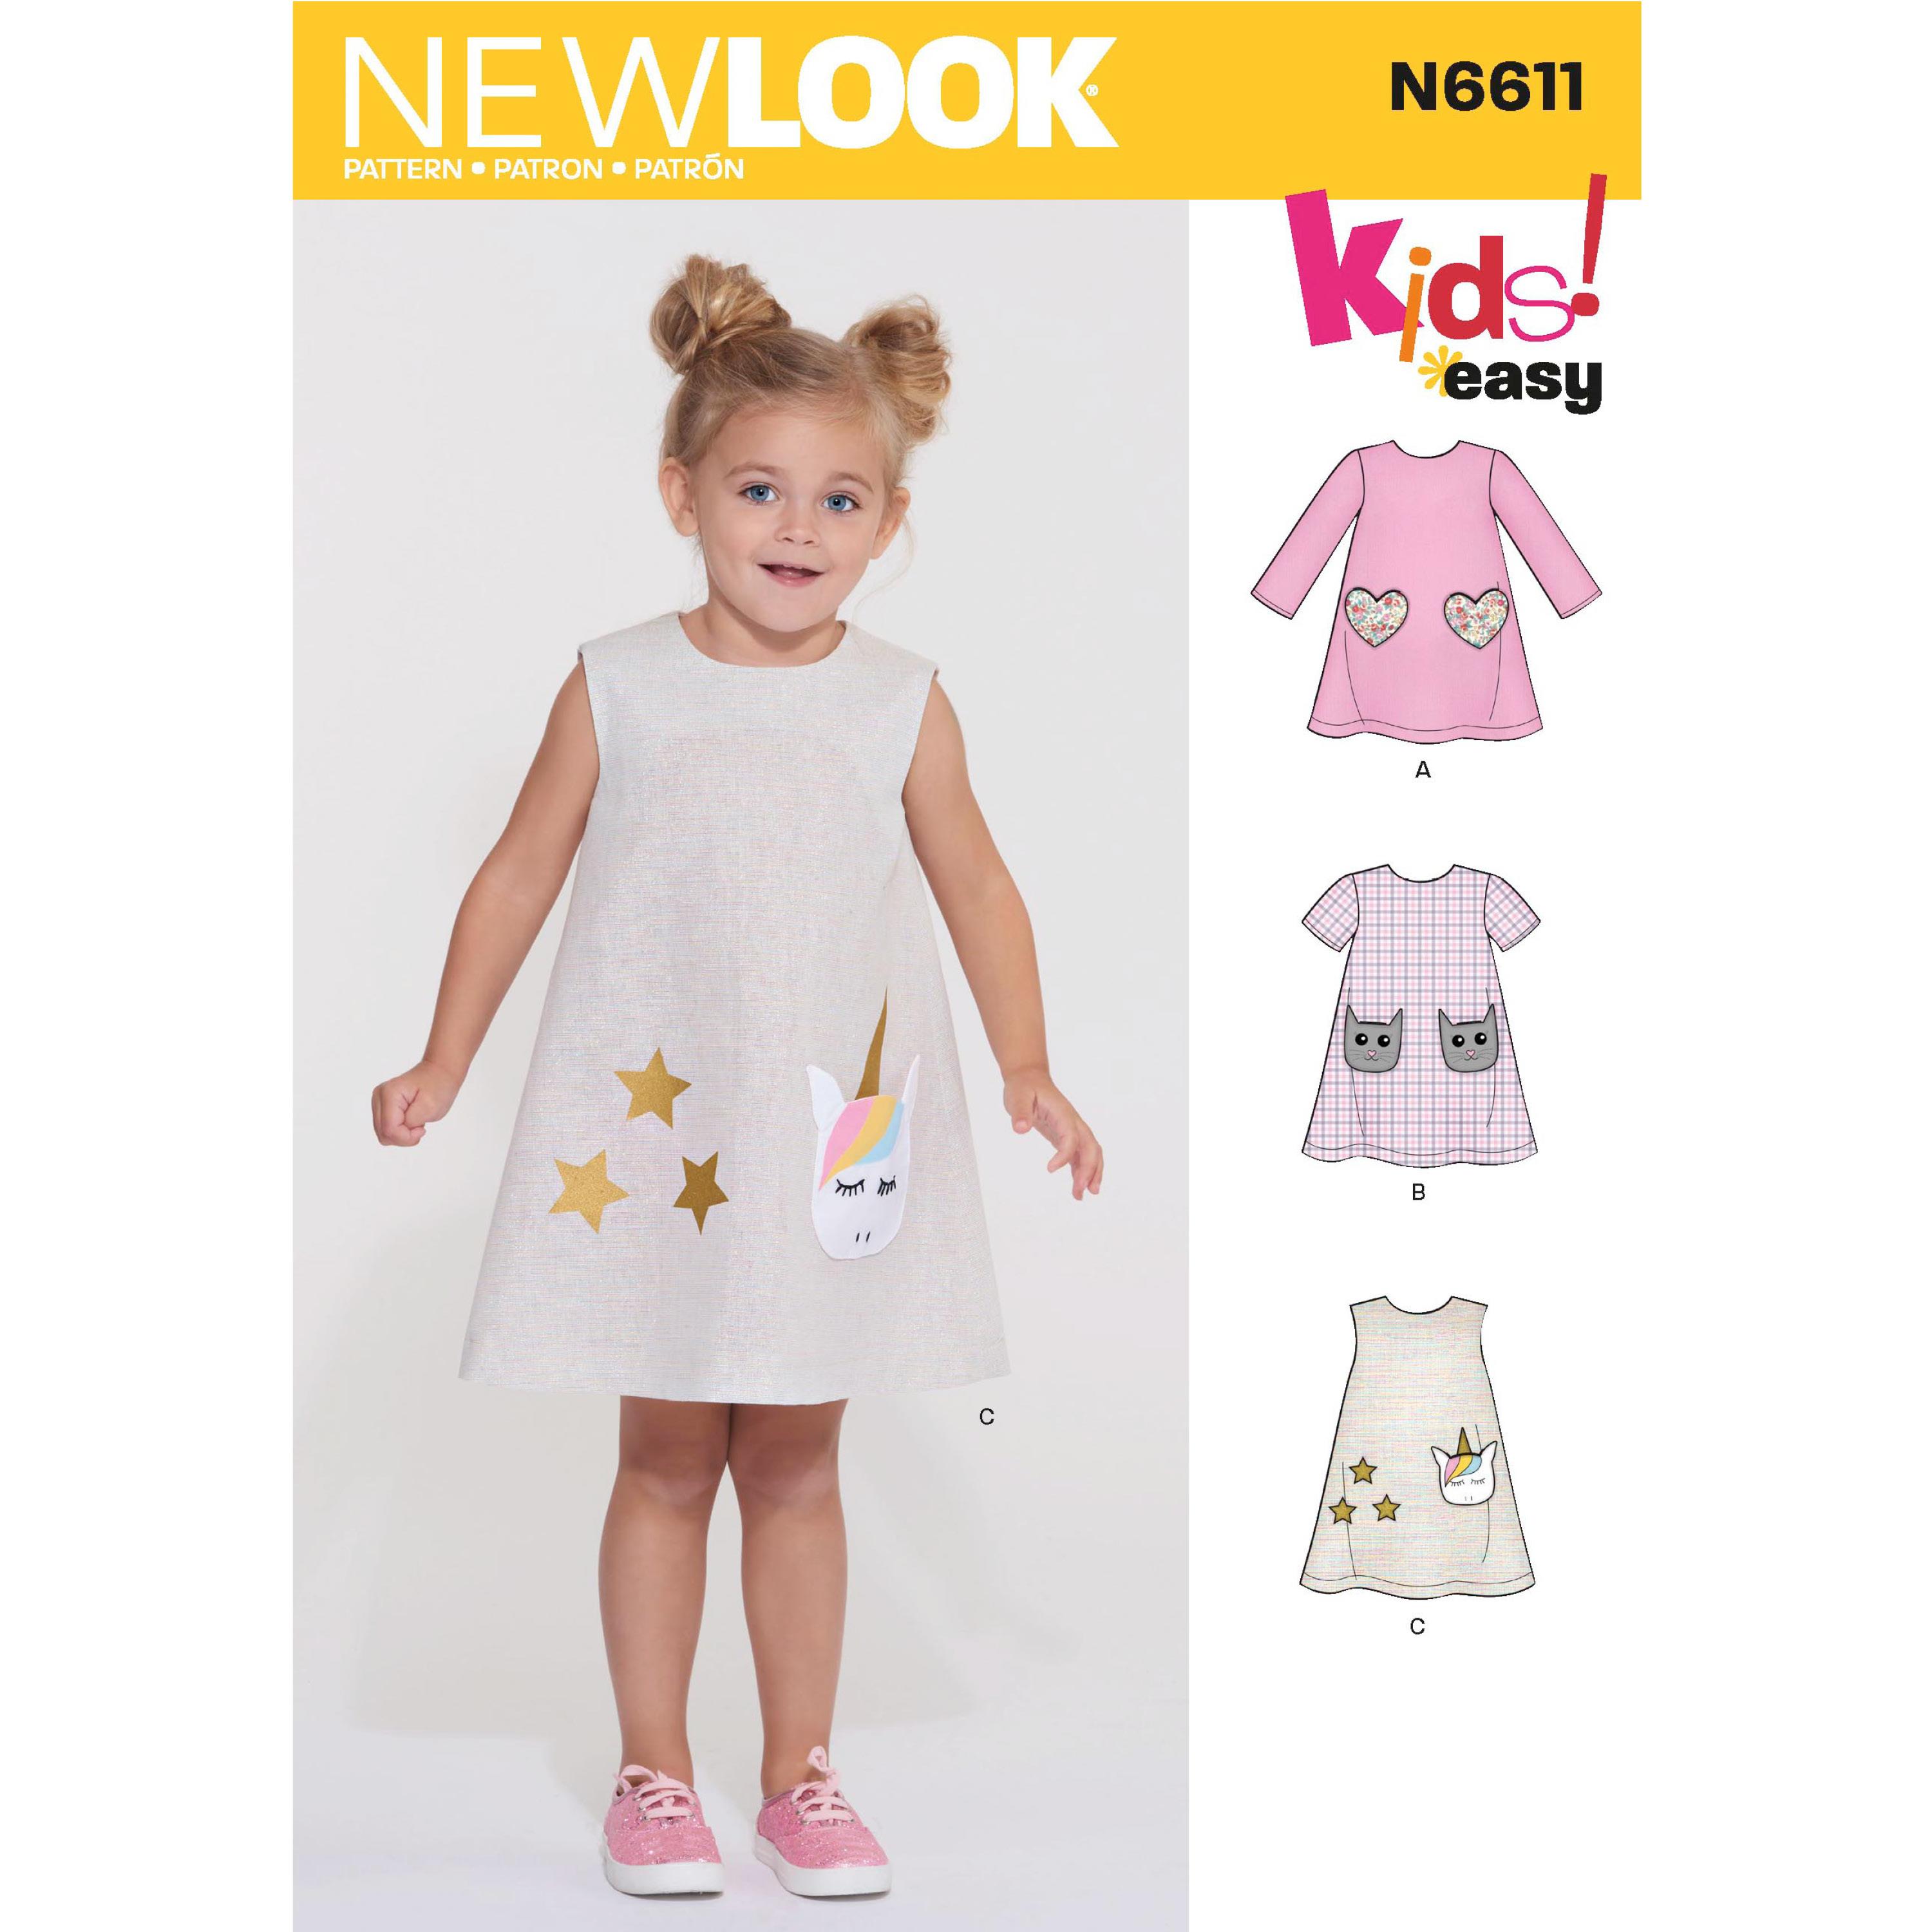 NewLook Sewing Pattern N6611 Children's Novelty Dress